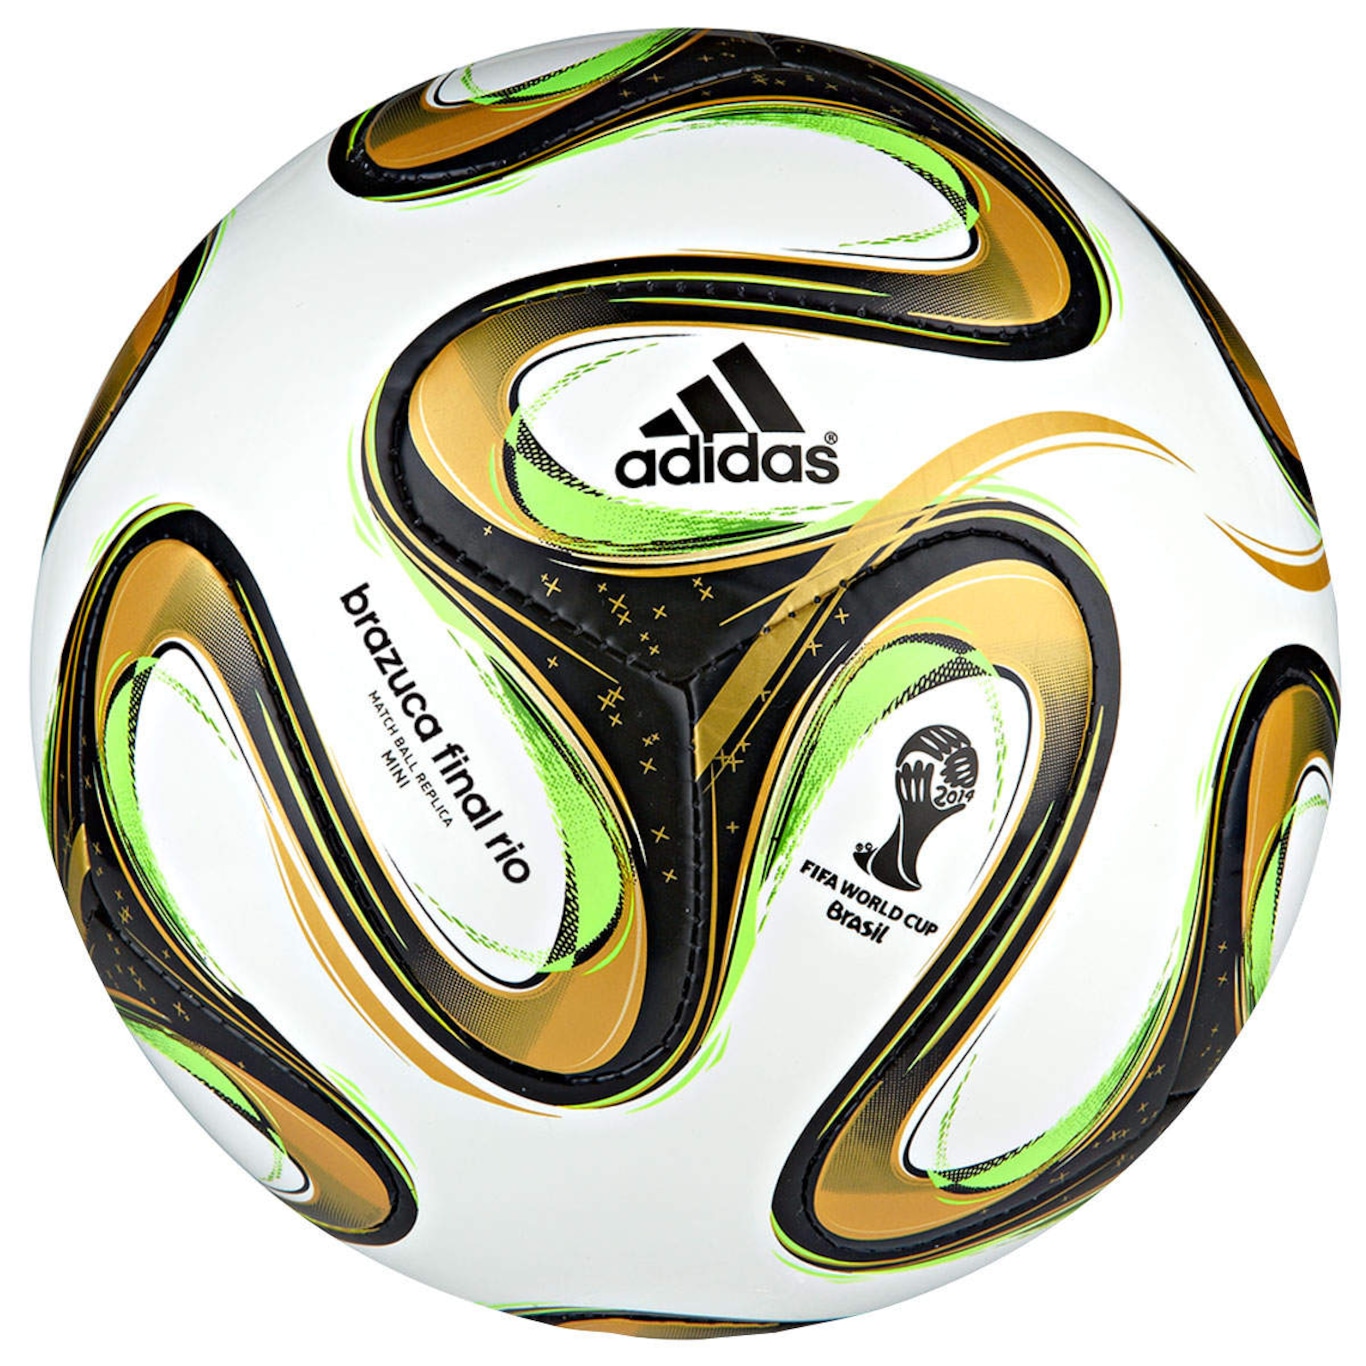 Brazuca - 2014 World Cup ball, A Brazuca é a bola da Copa d…